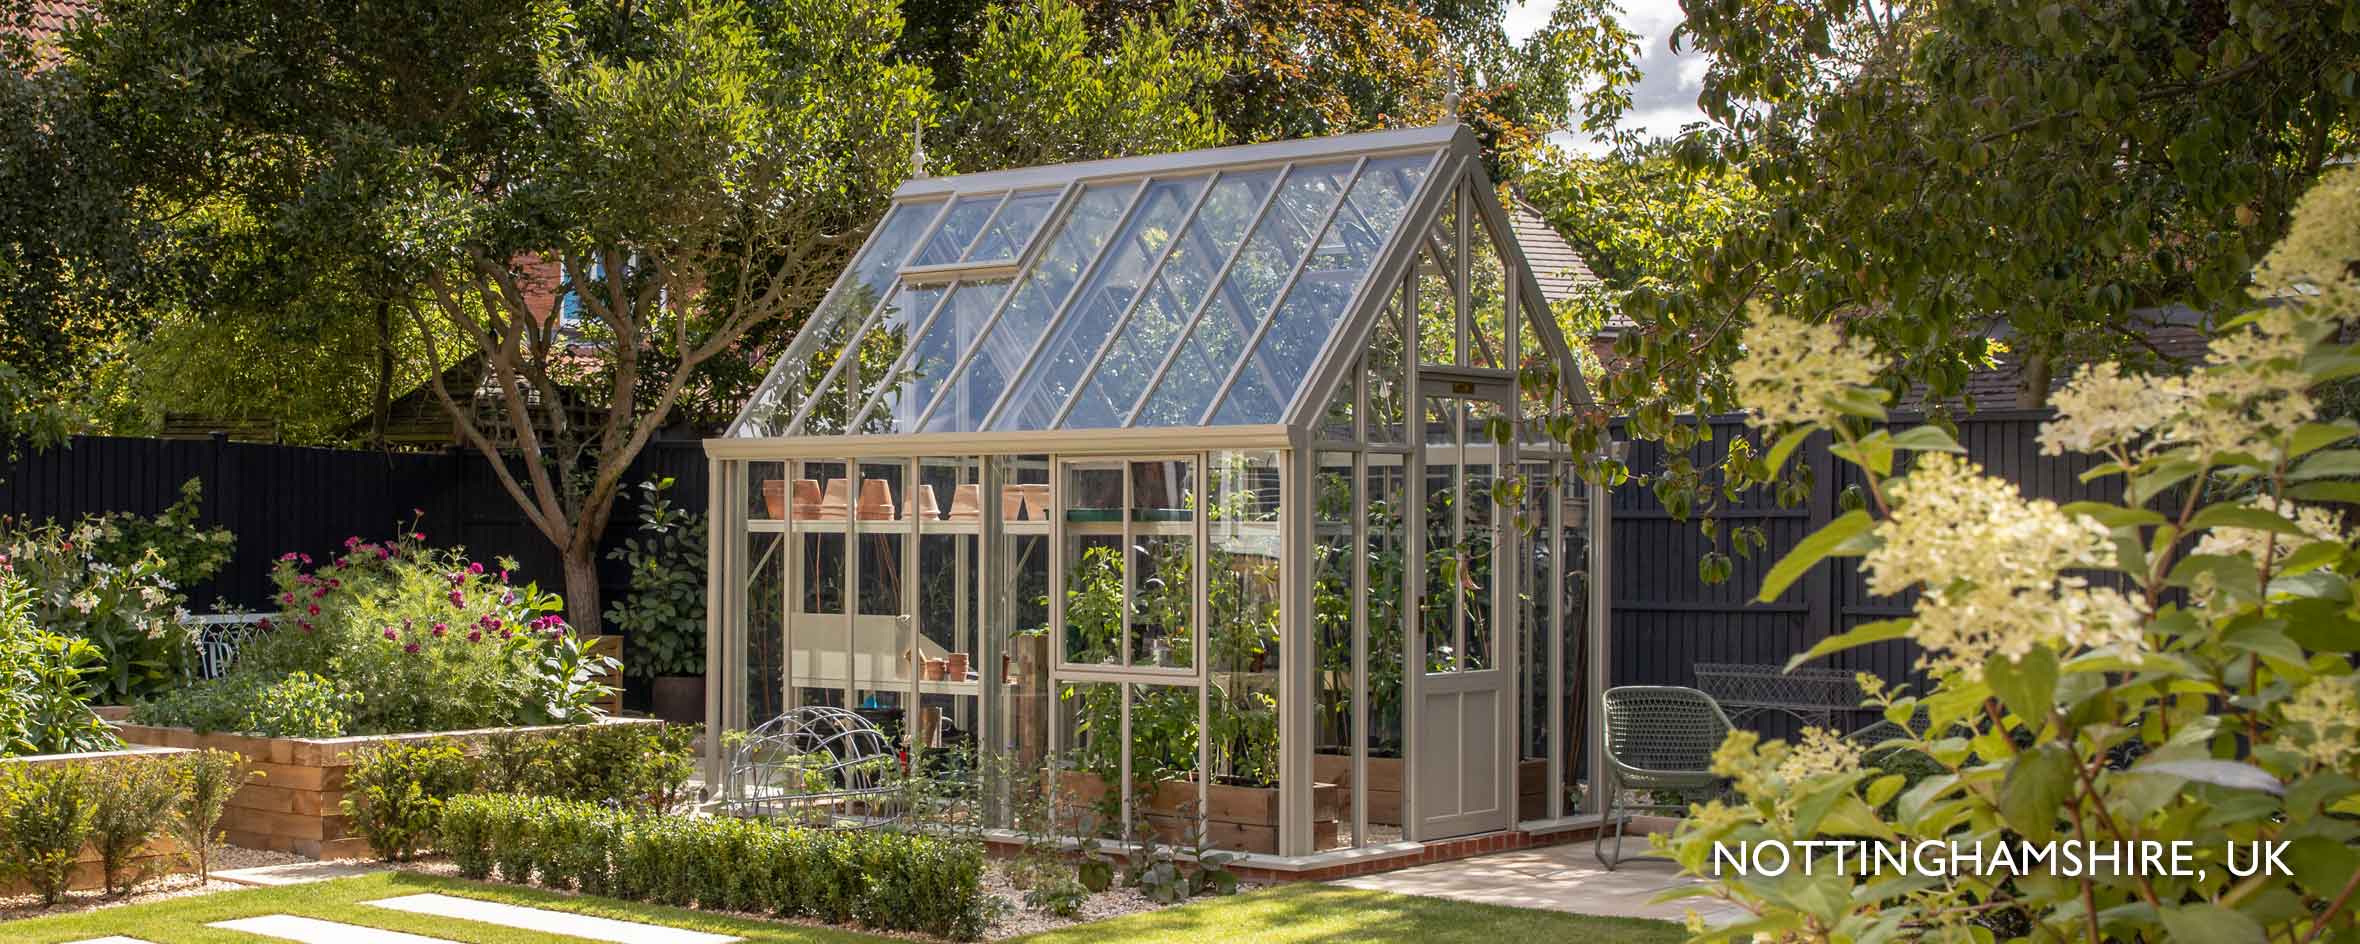 Victorian Chelsea Greenhouse - Hartley Botanic